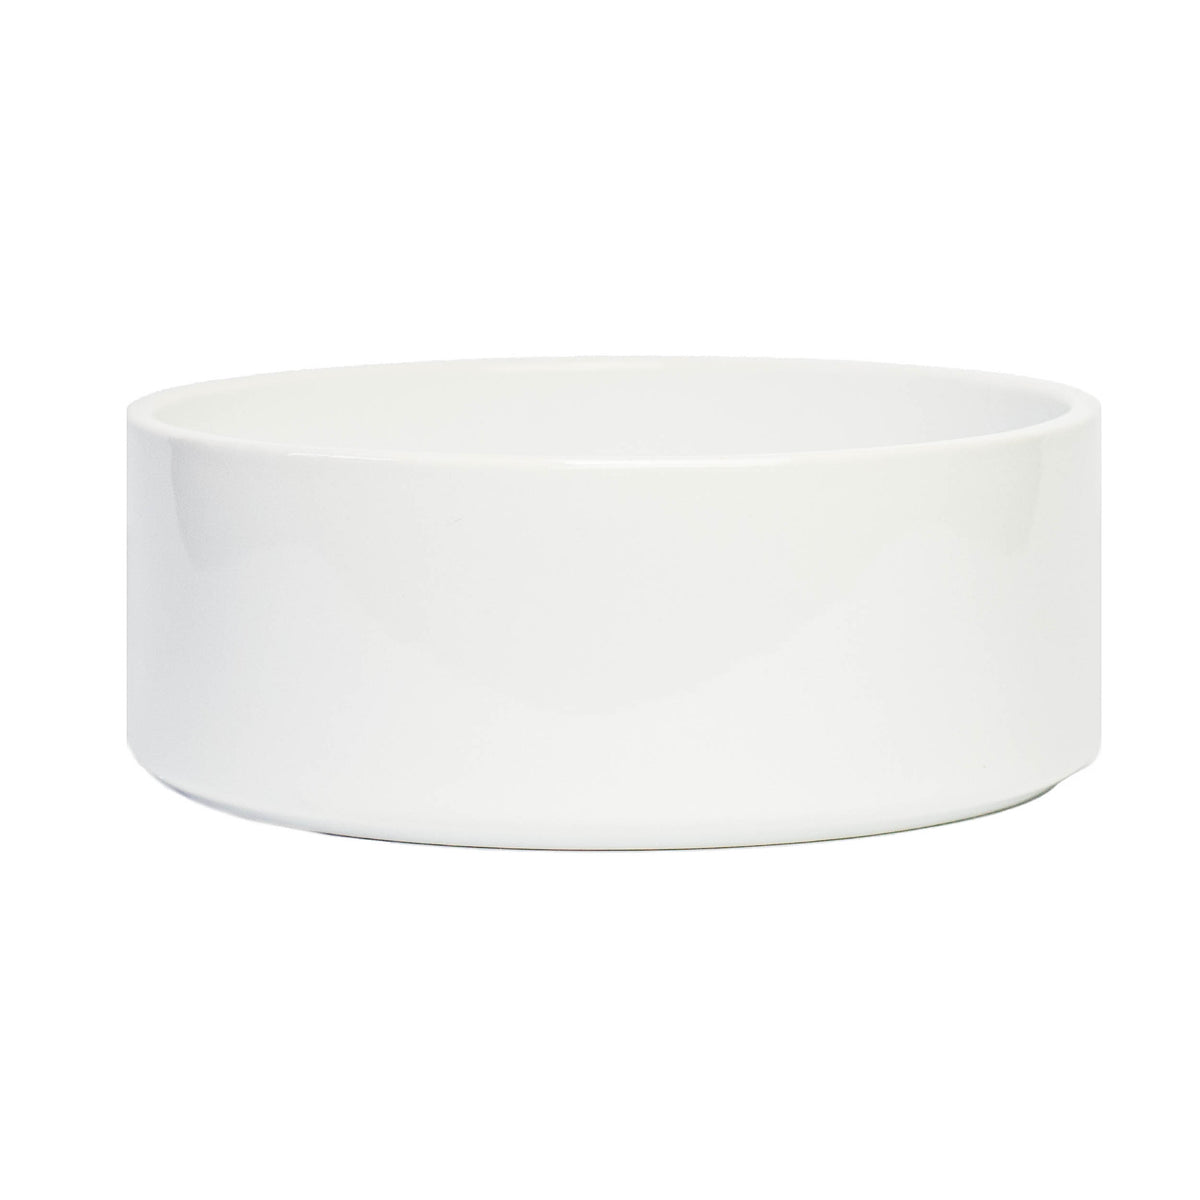 Personalised bowl for cats / ceramic - 22oz 650ml (design 5)